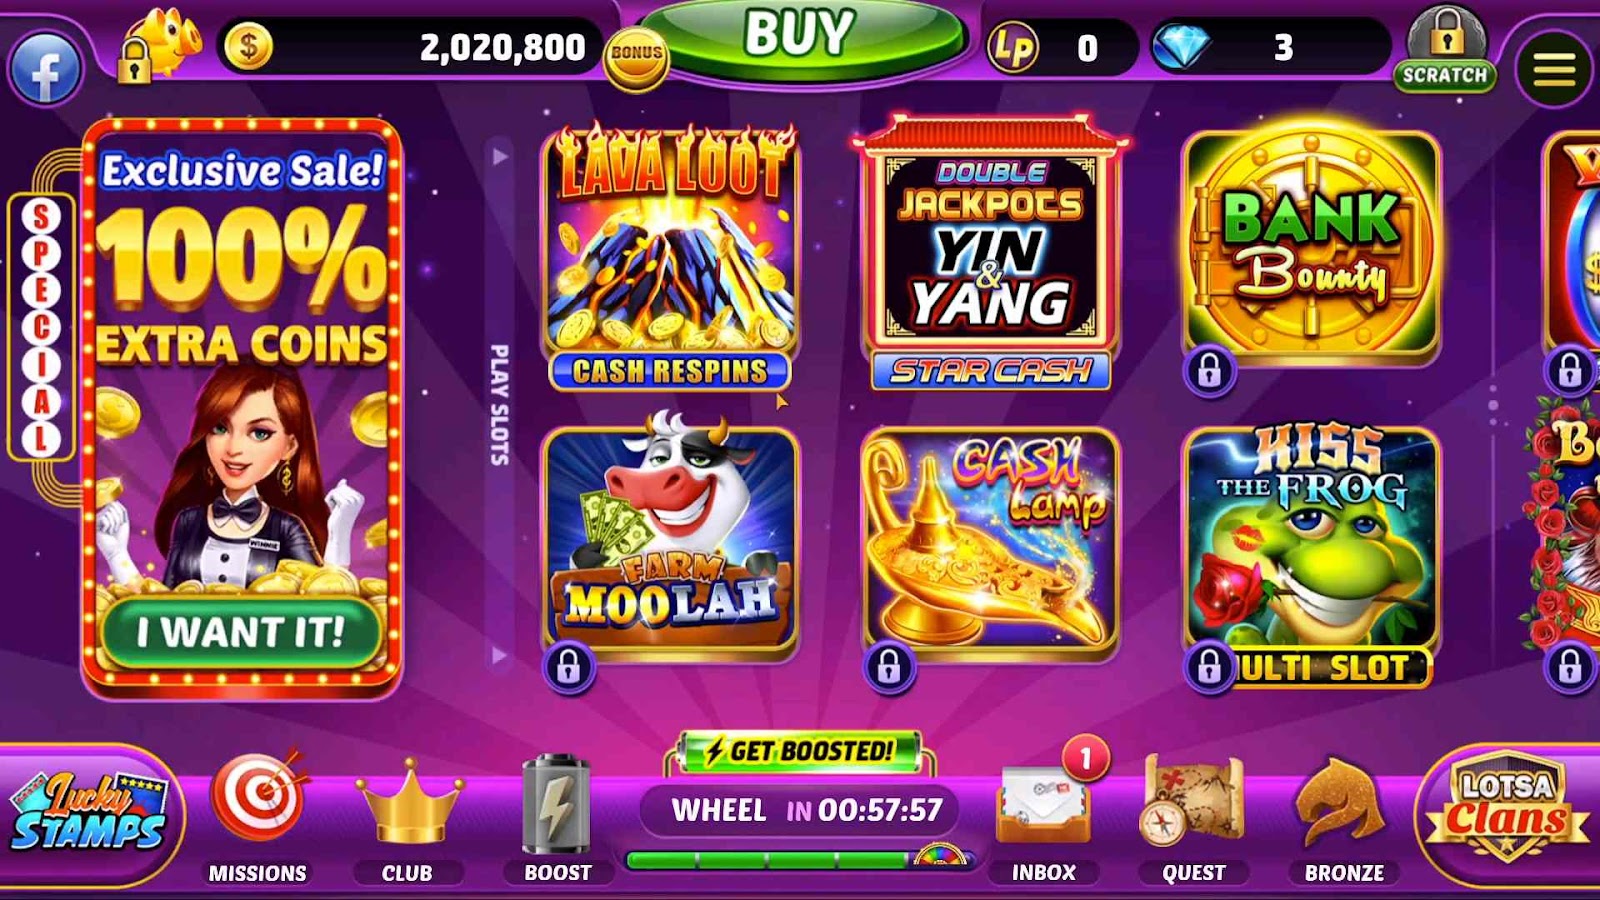 Lotsa Slots - Casino Games on PC